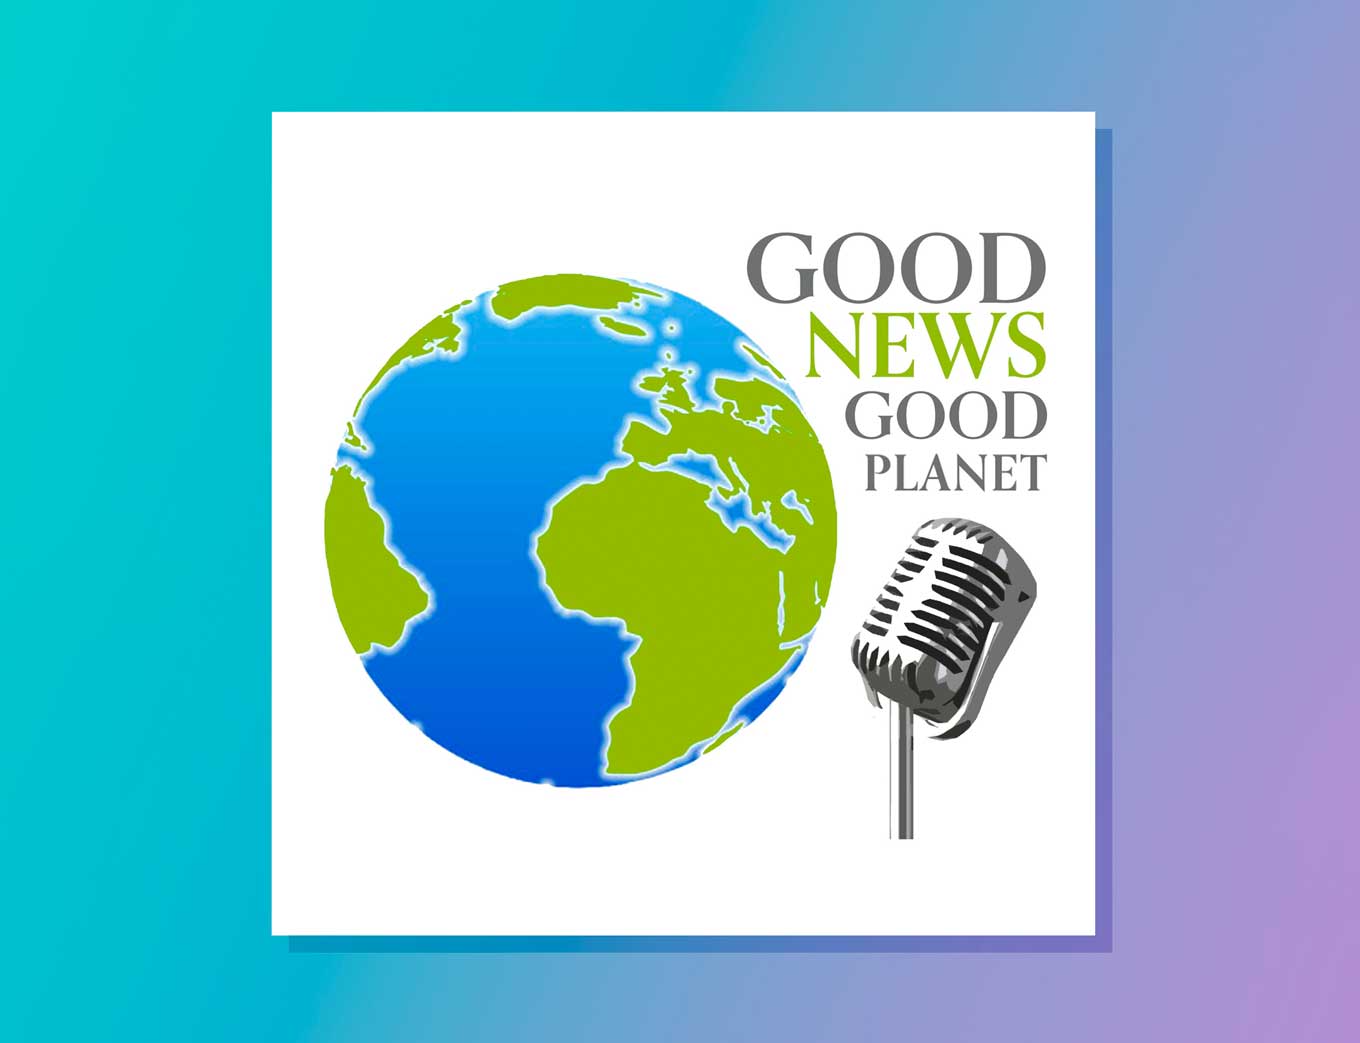 Podcast Artwork: Good News Good Planet